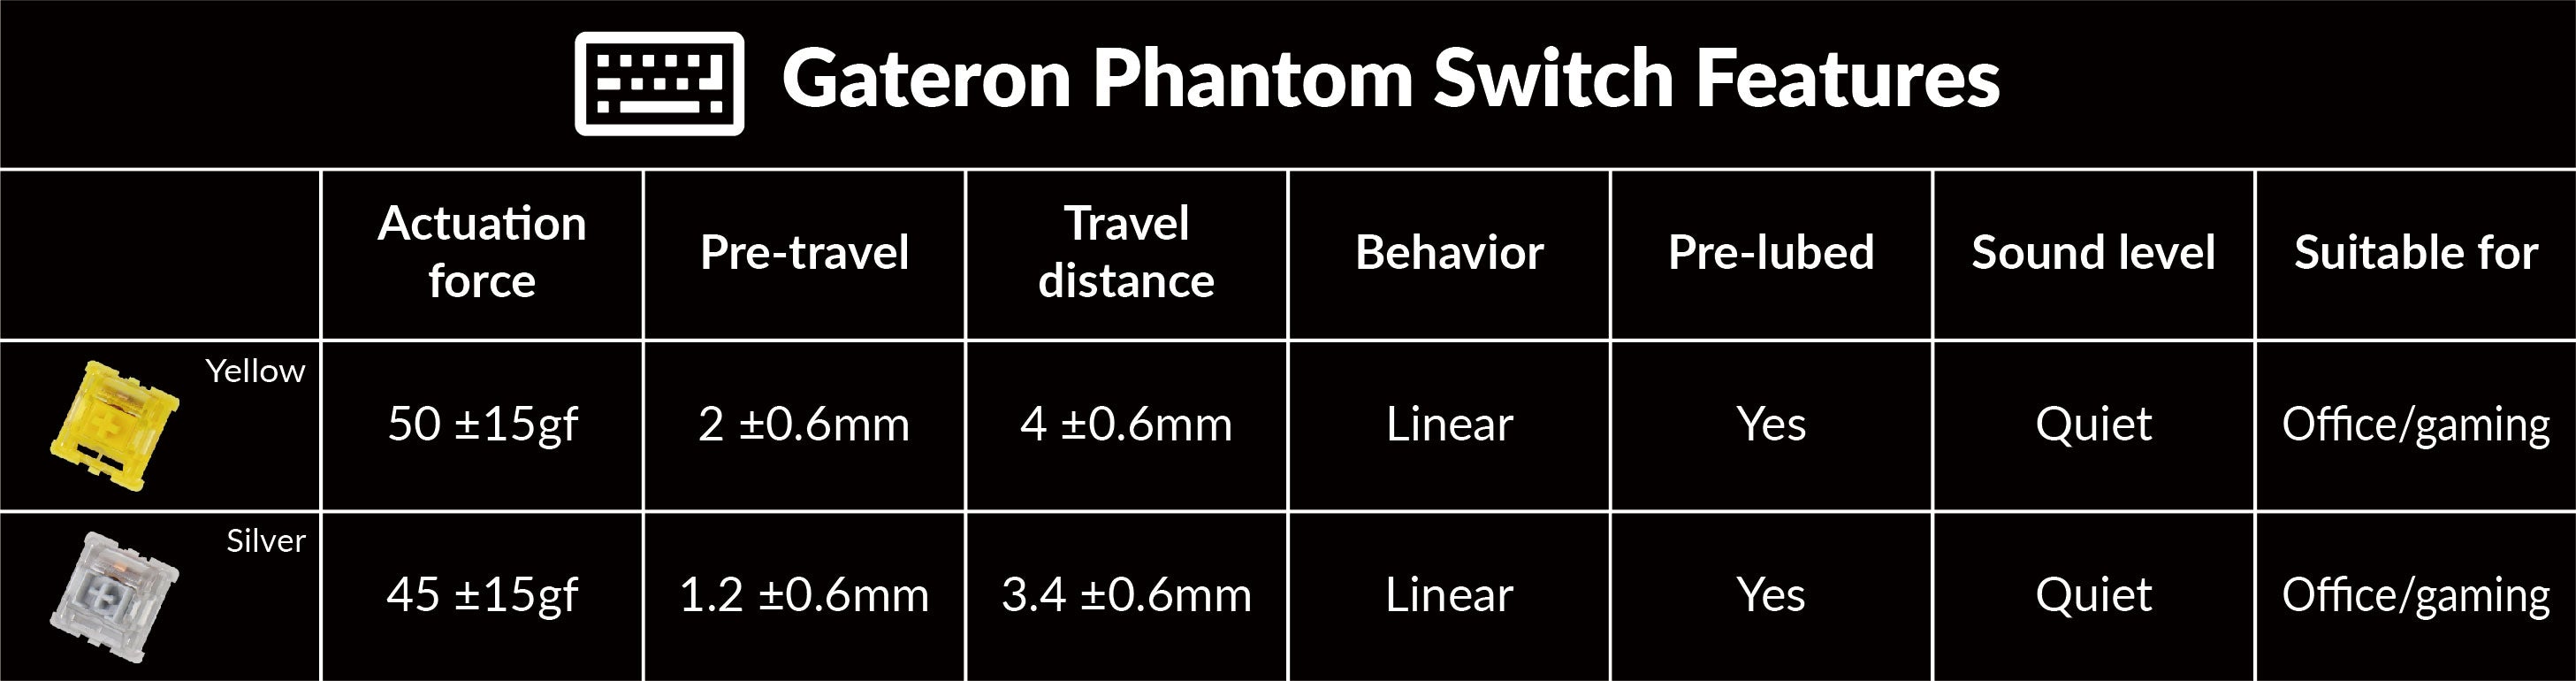 Keychron Q1 Gateron Phantom switch features